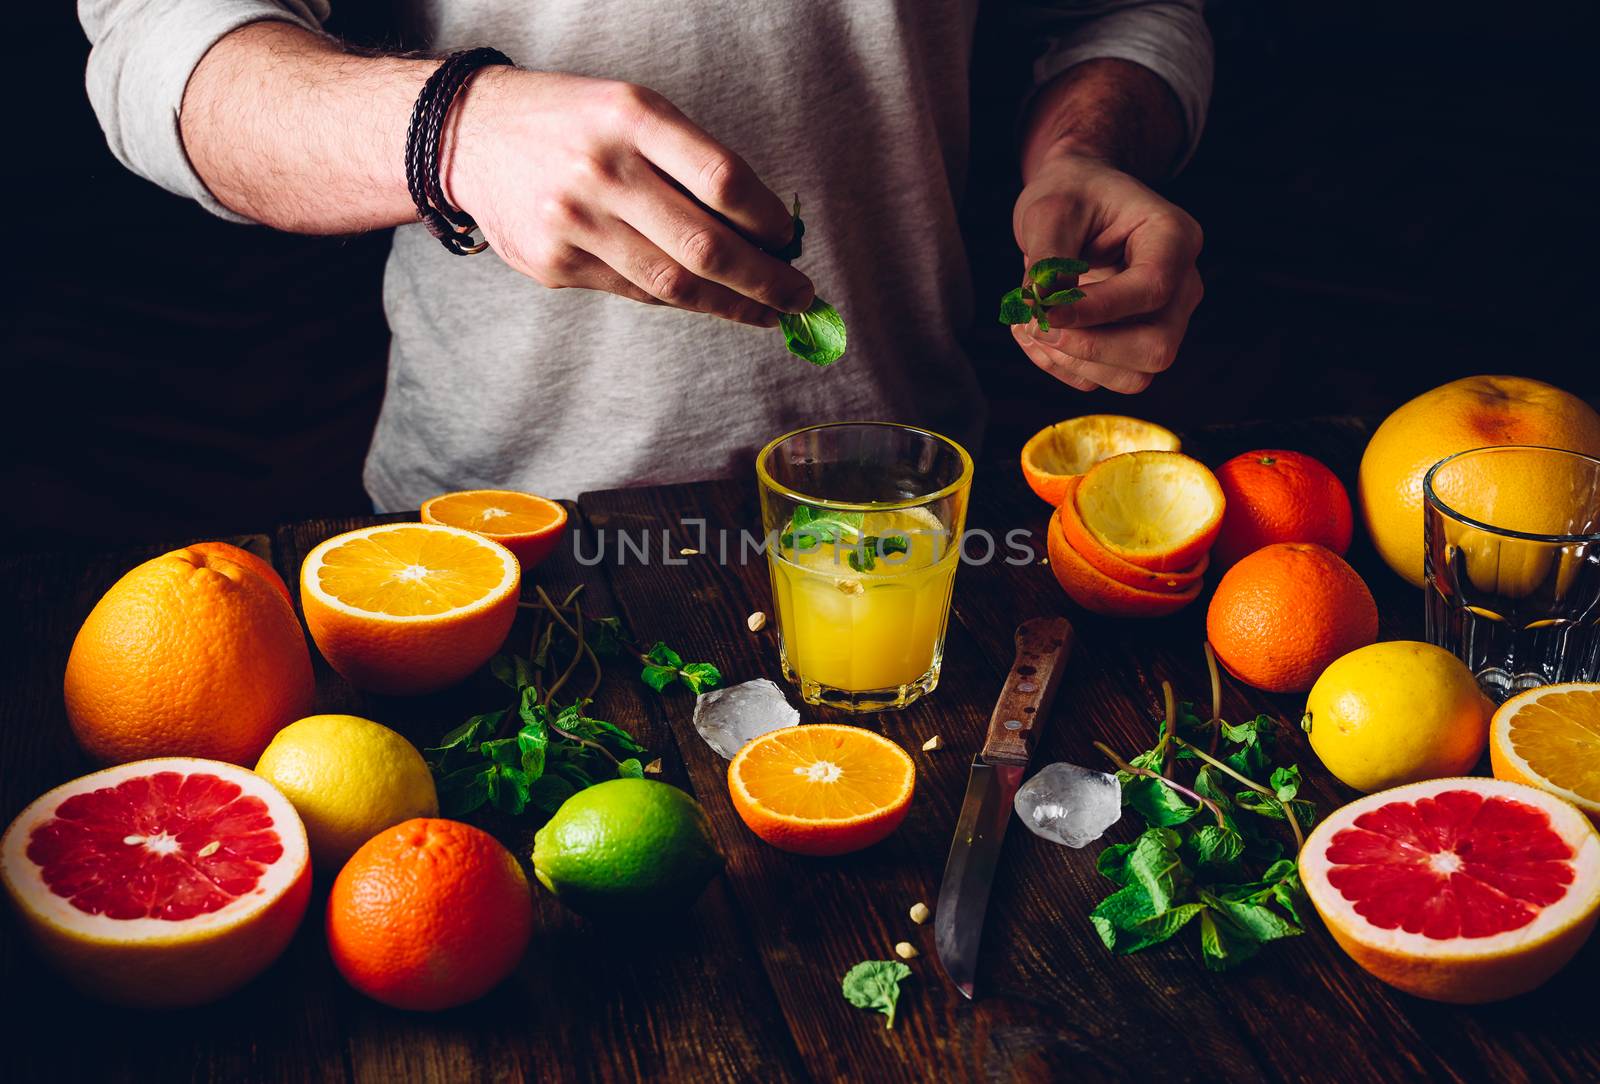 Guy Prepare the Citrus Cocktail. by Seva_blsv